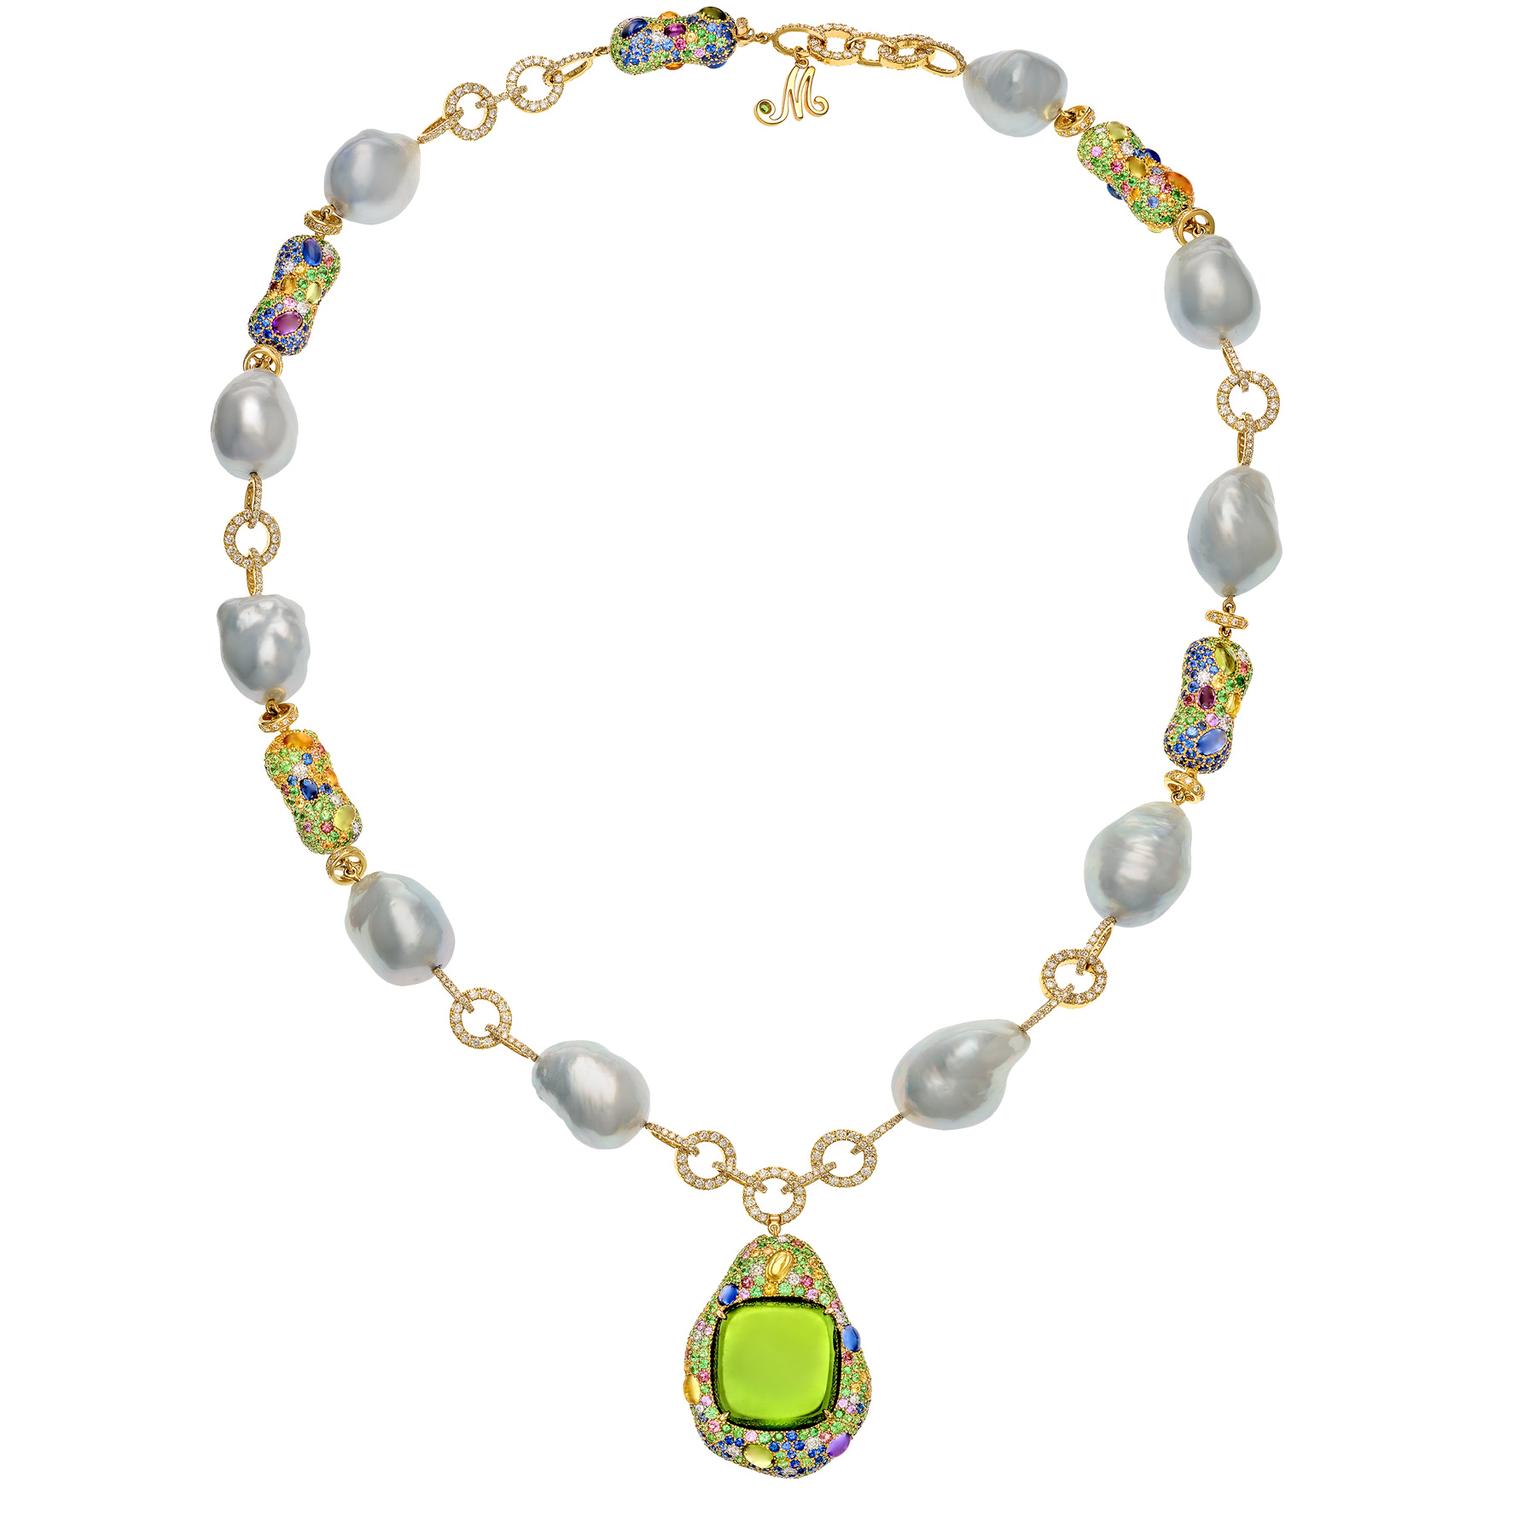 Margot McKinney green tourmaline and baroque pearl pendant